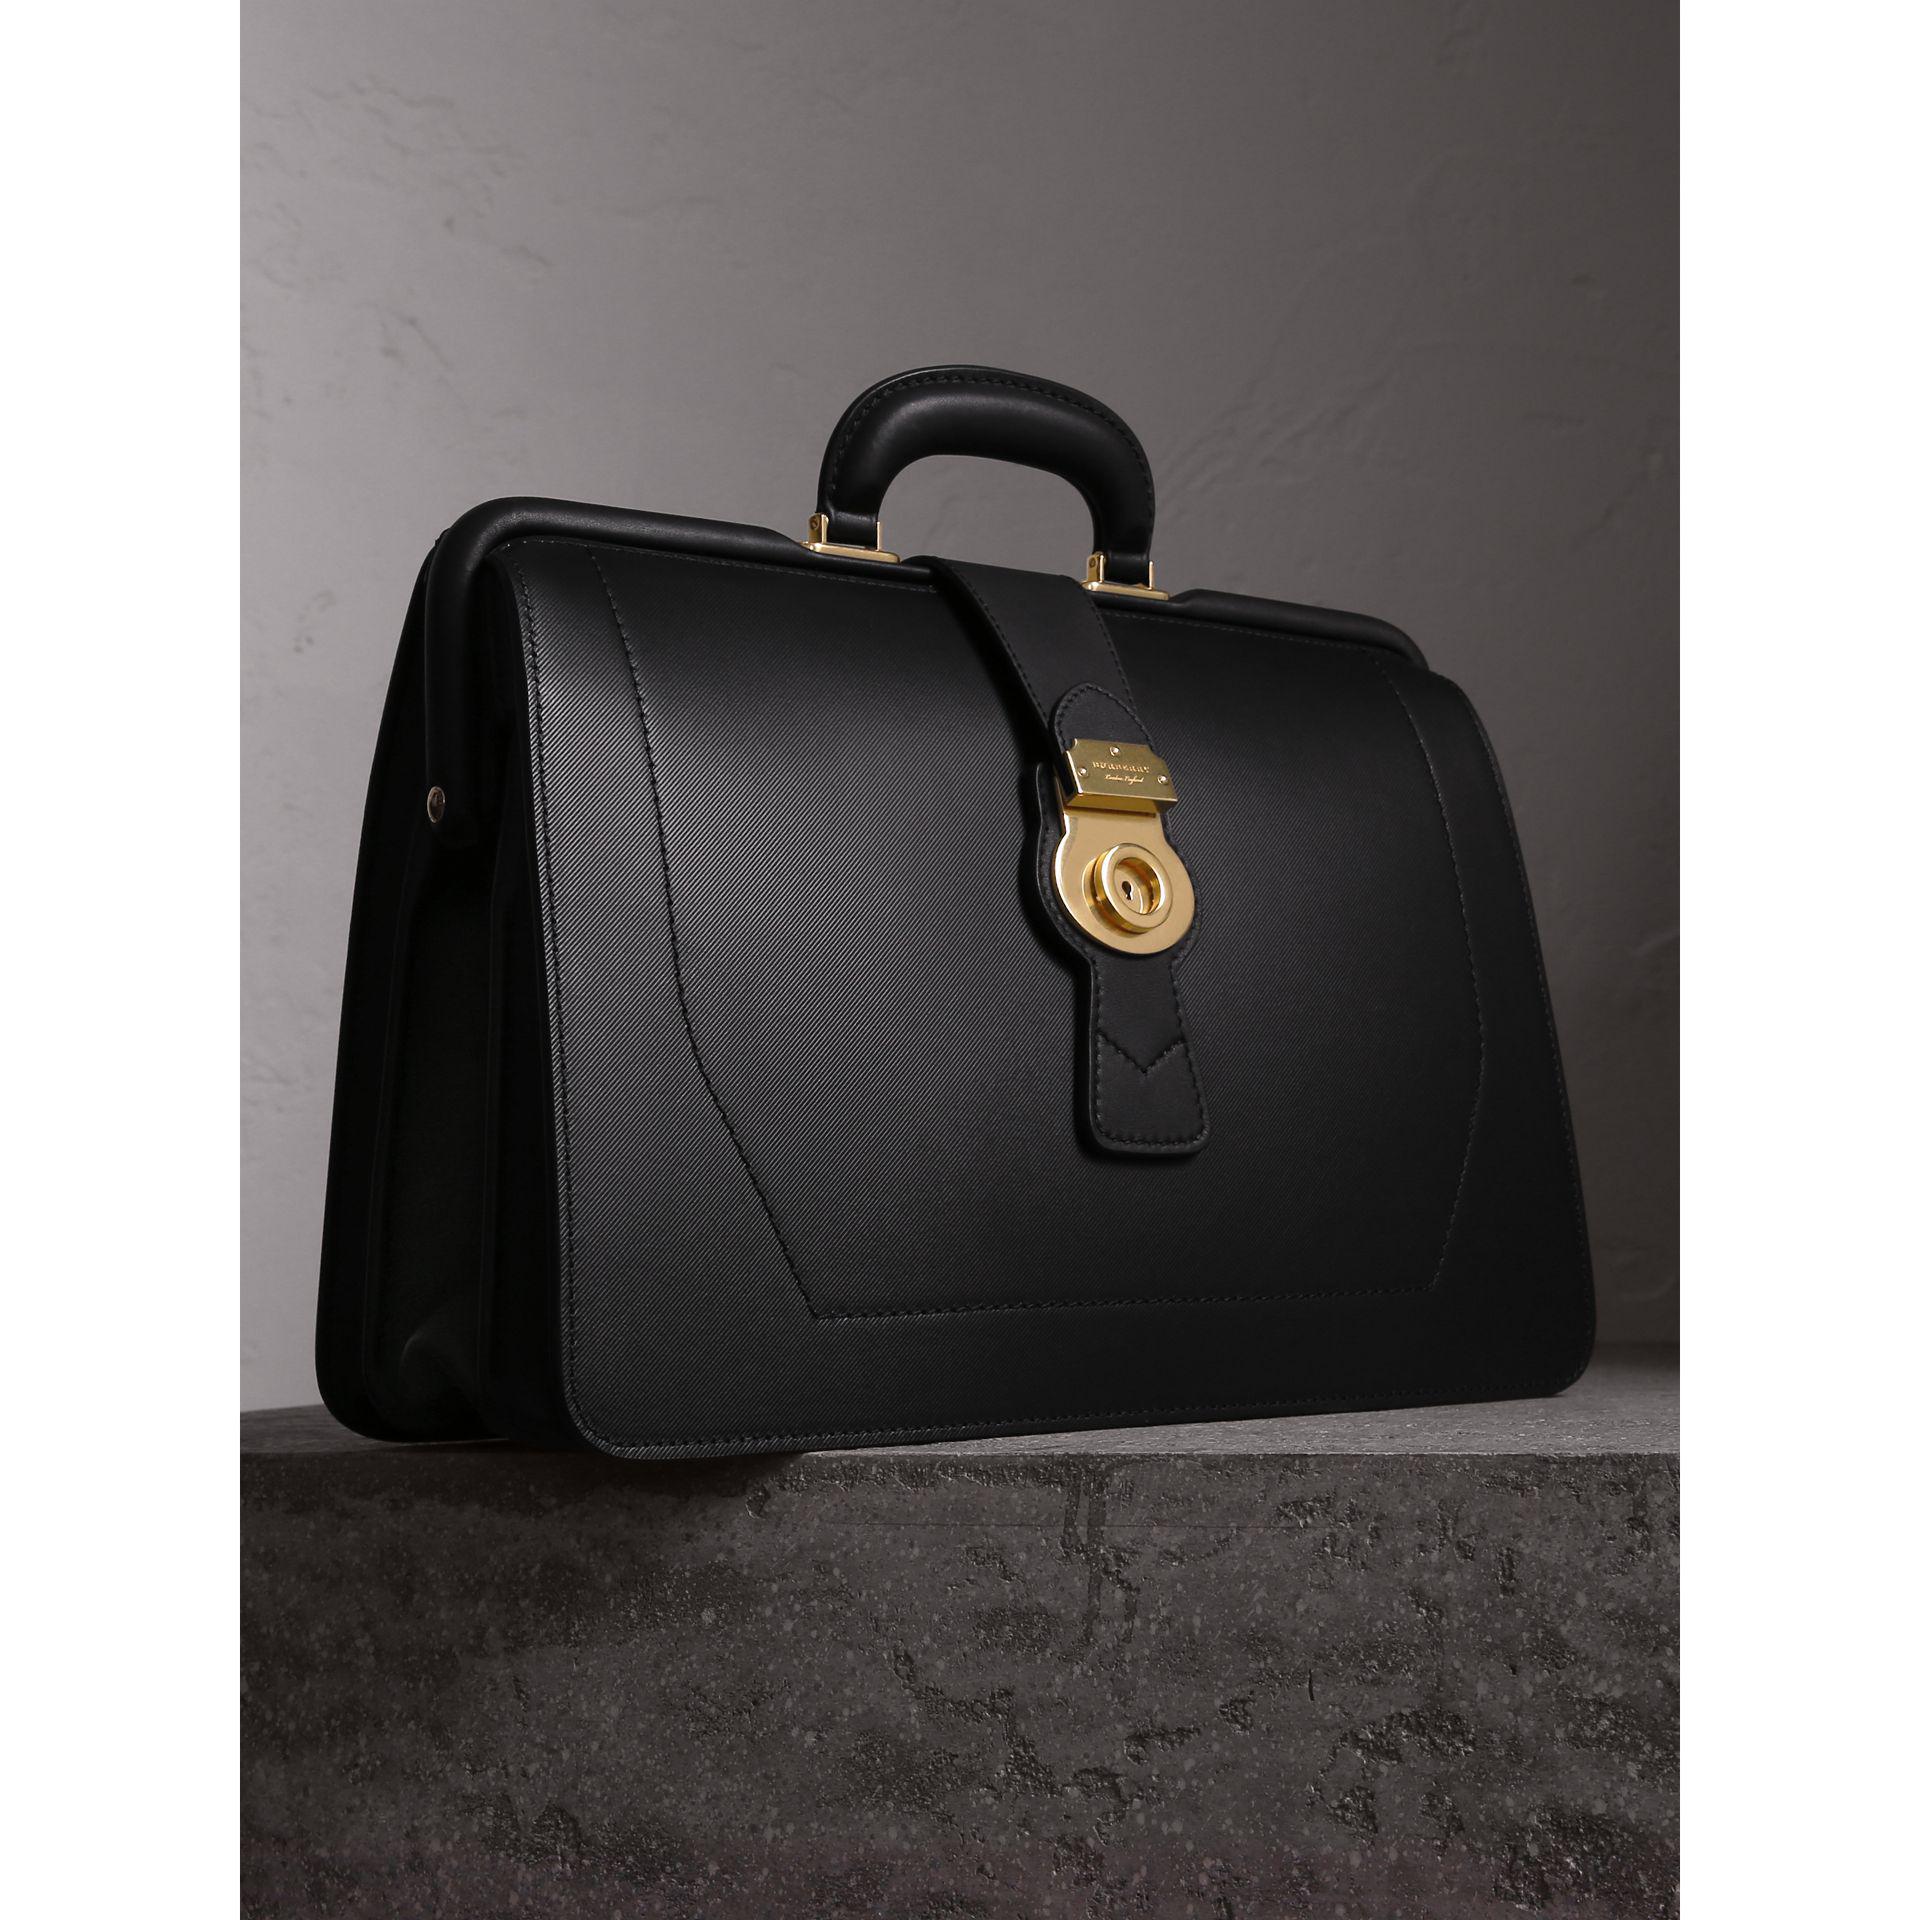 Burberry Leather The Dk88 Doctor's Bag in Black/Black (Black) for Men - Lyst